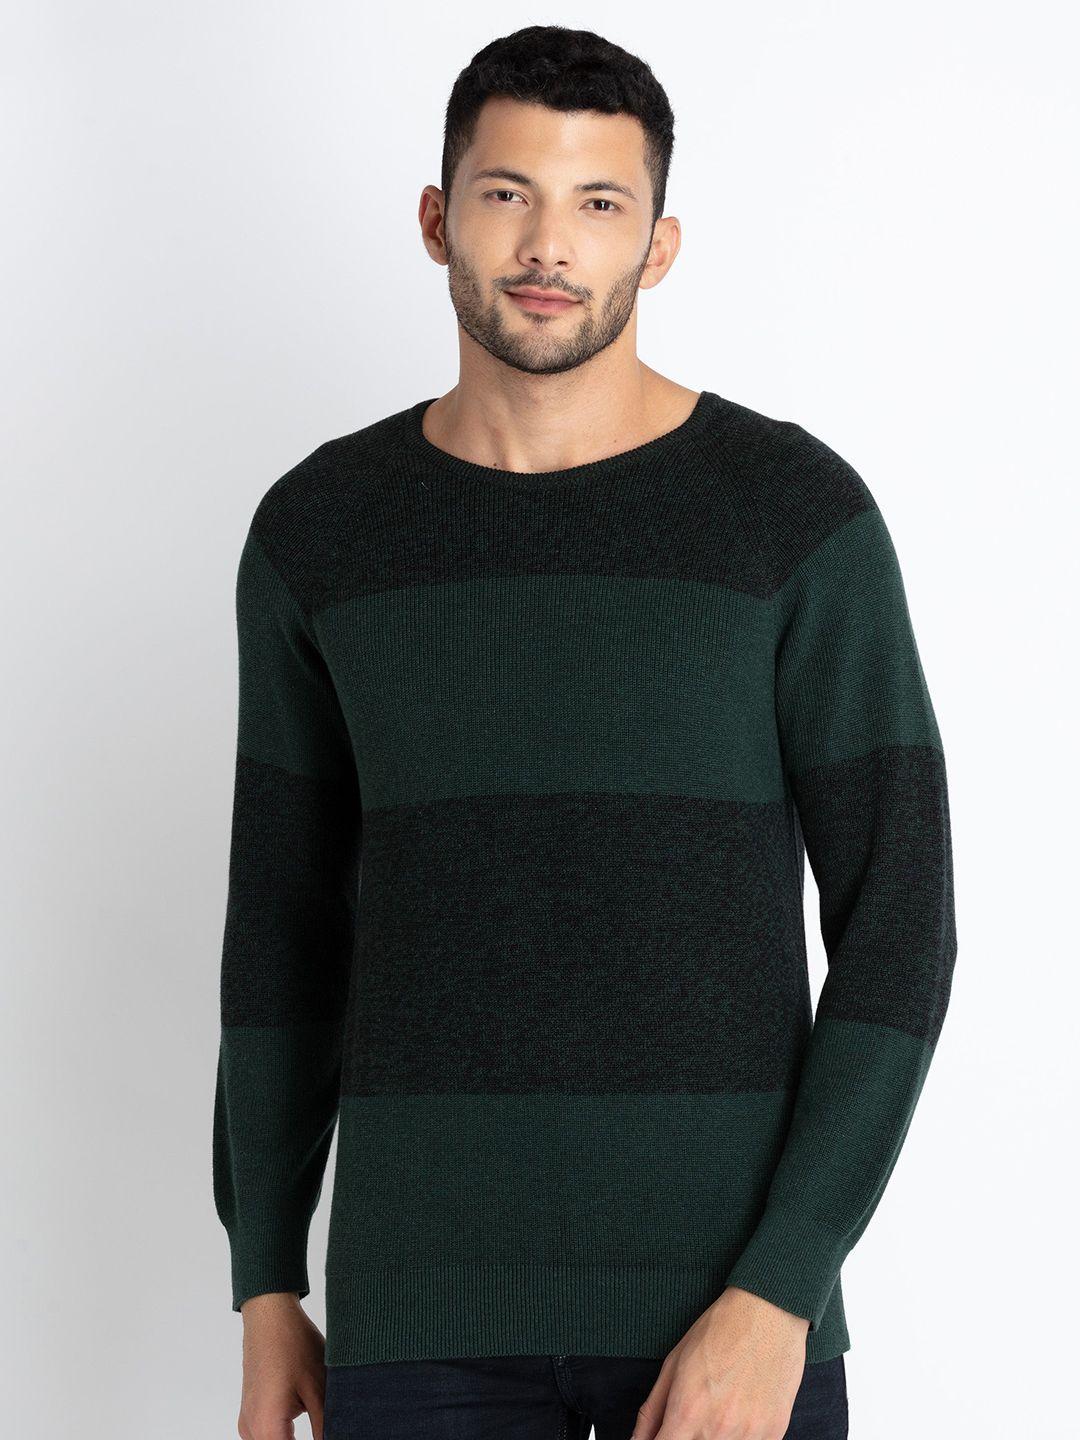 status quo colourblocked cotton pullover sweater